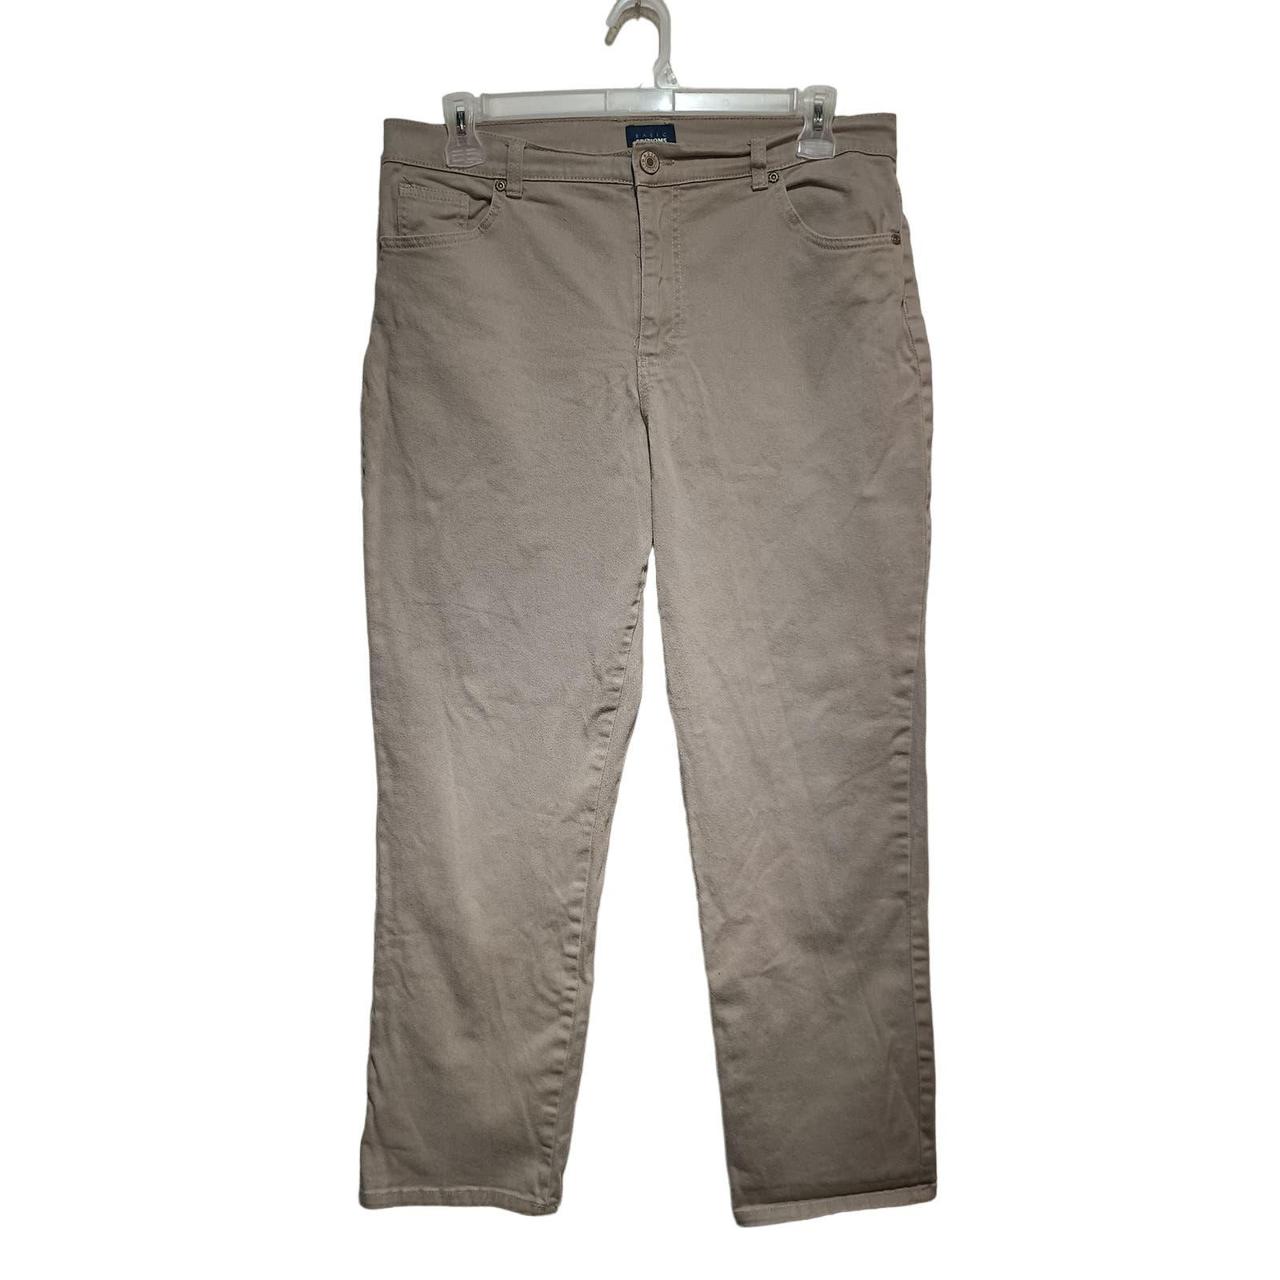 Basic Editions Women's Pants Size 14 - Depop